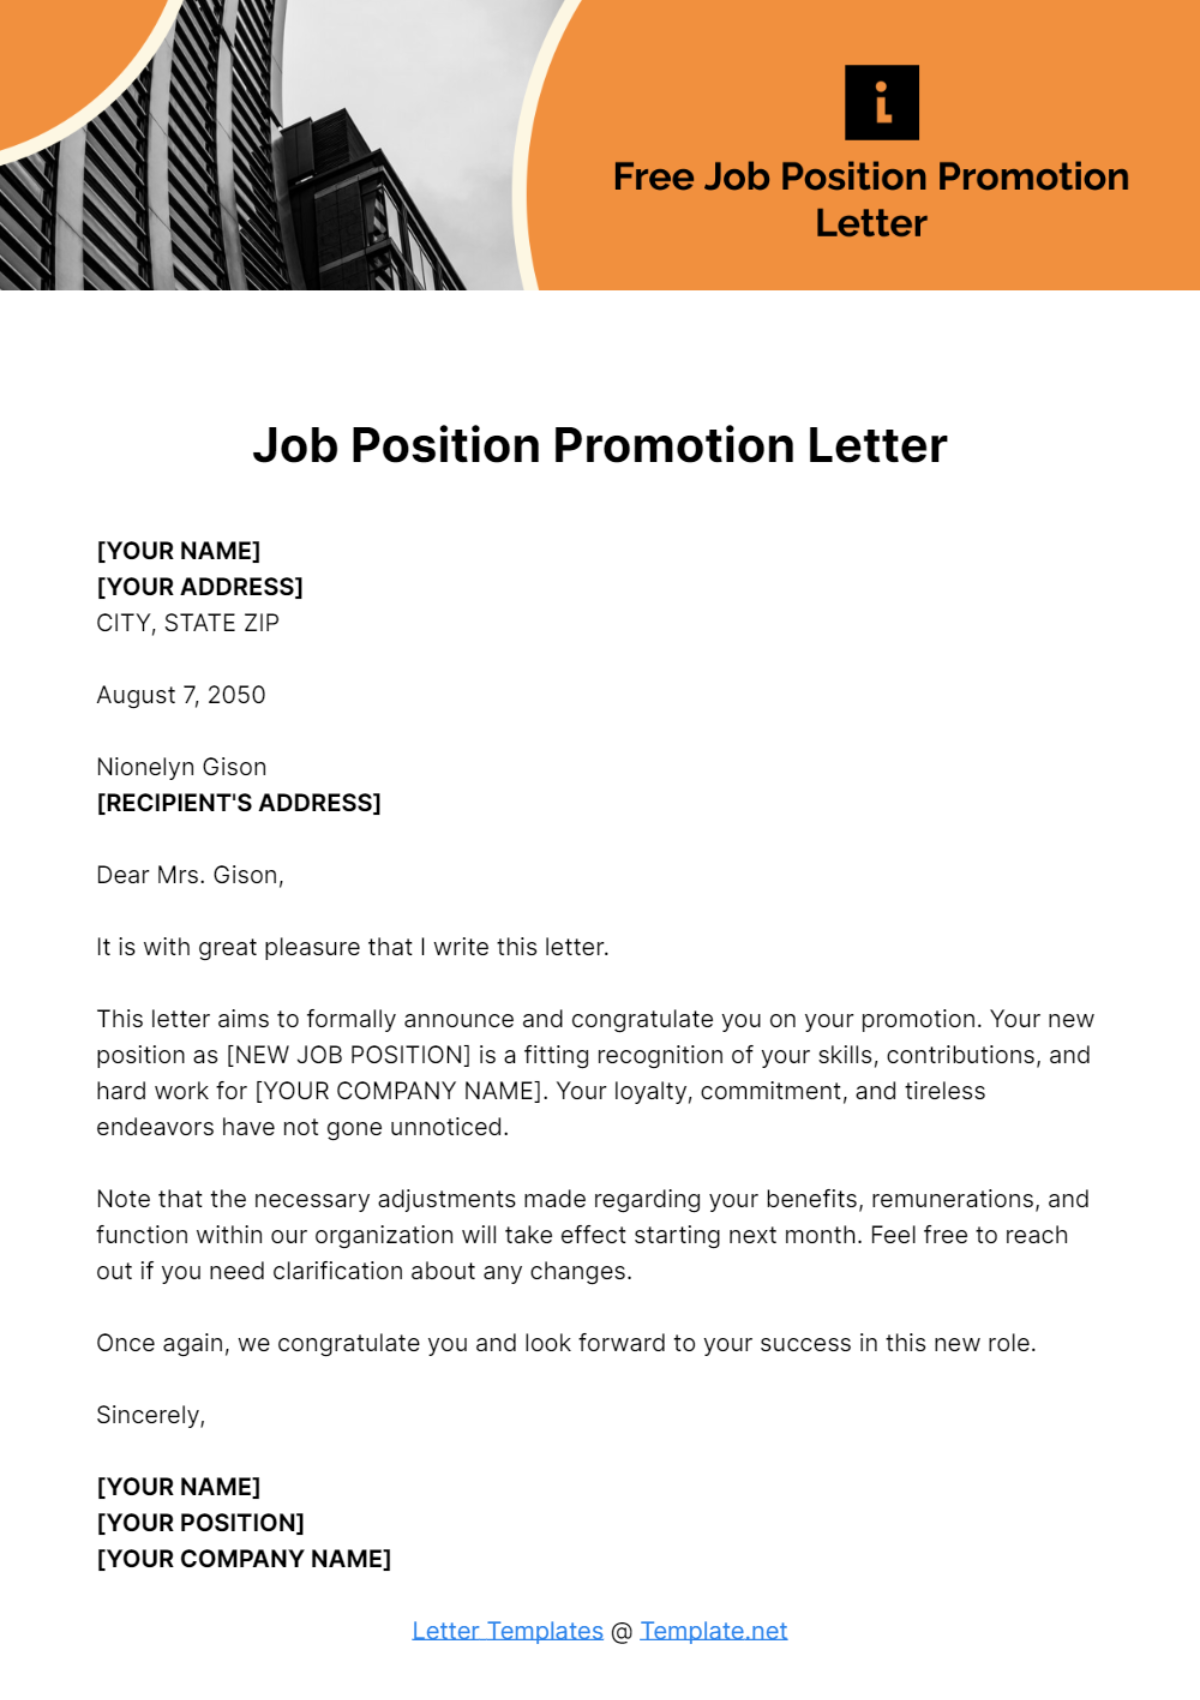 Job Position Promotion Letter Template